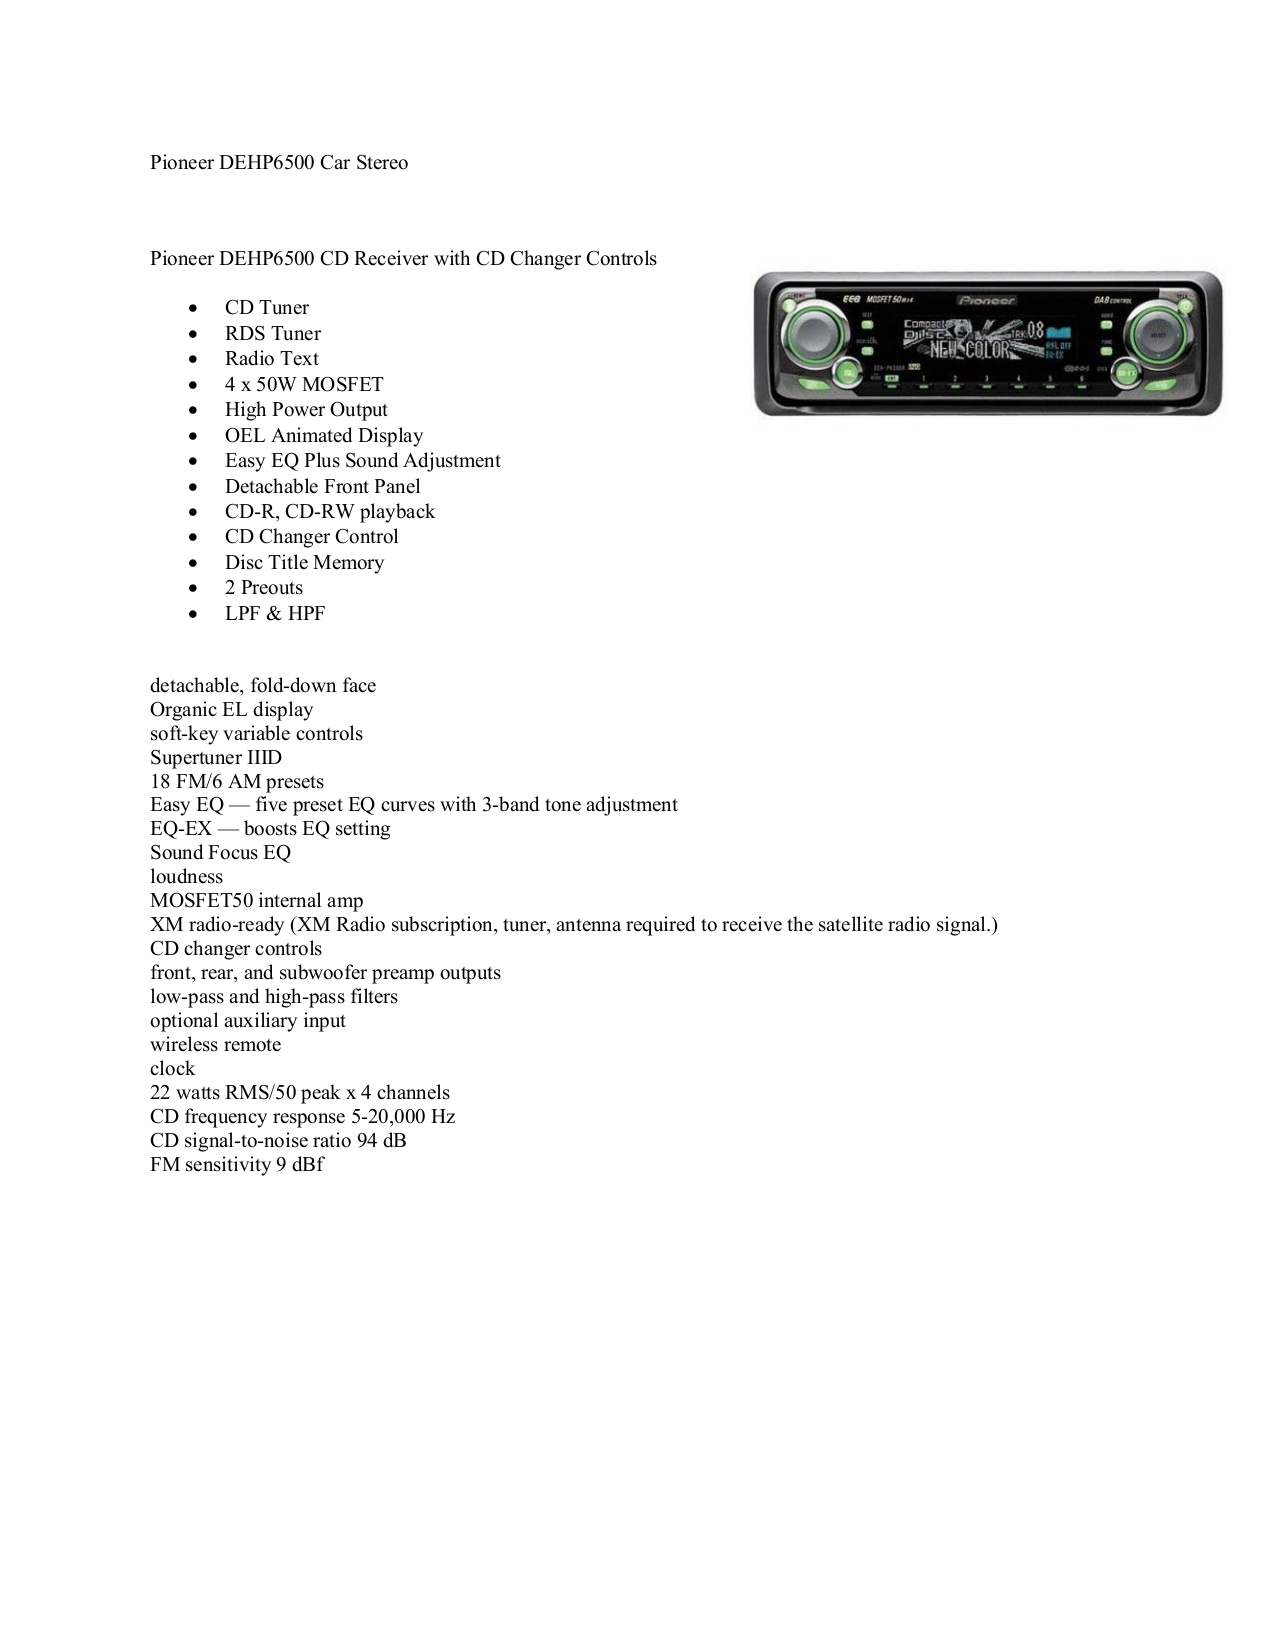 Download free pdf for pioneer deh-p6500 car receiver manual.